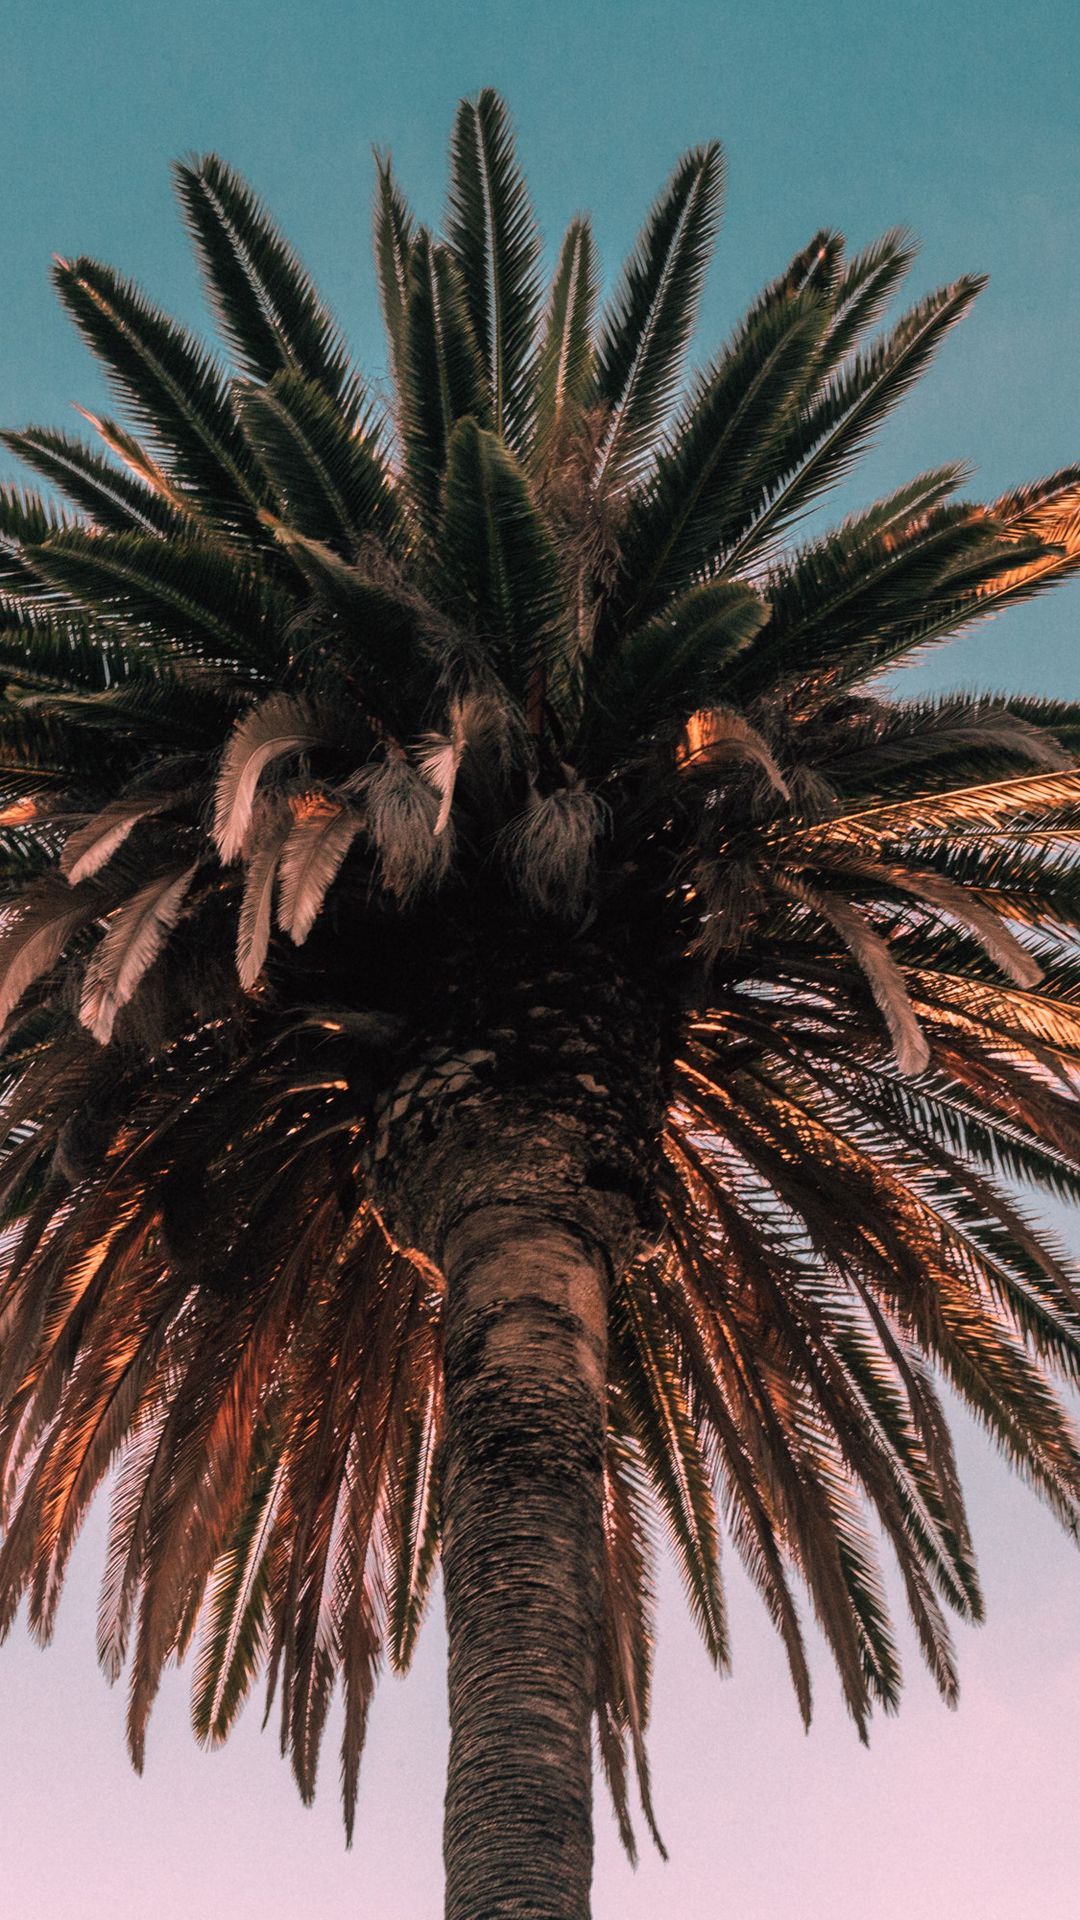 Download wallpaper 1080x1920 palm, tree, bottom view samsung